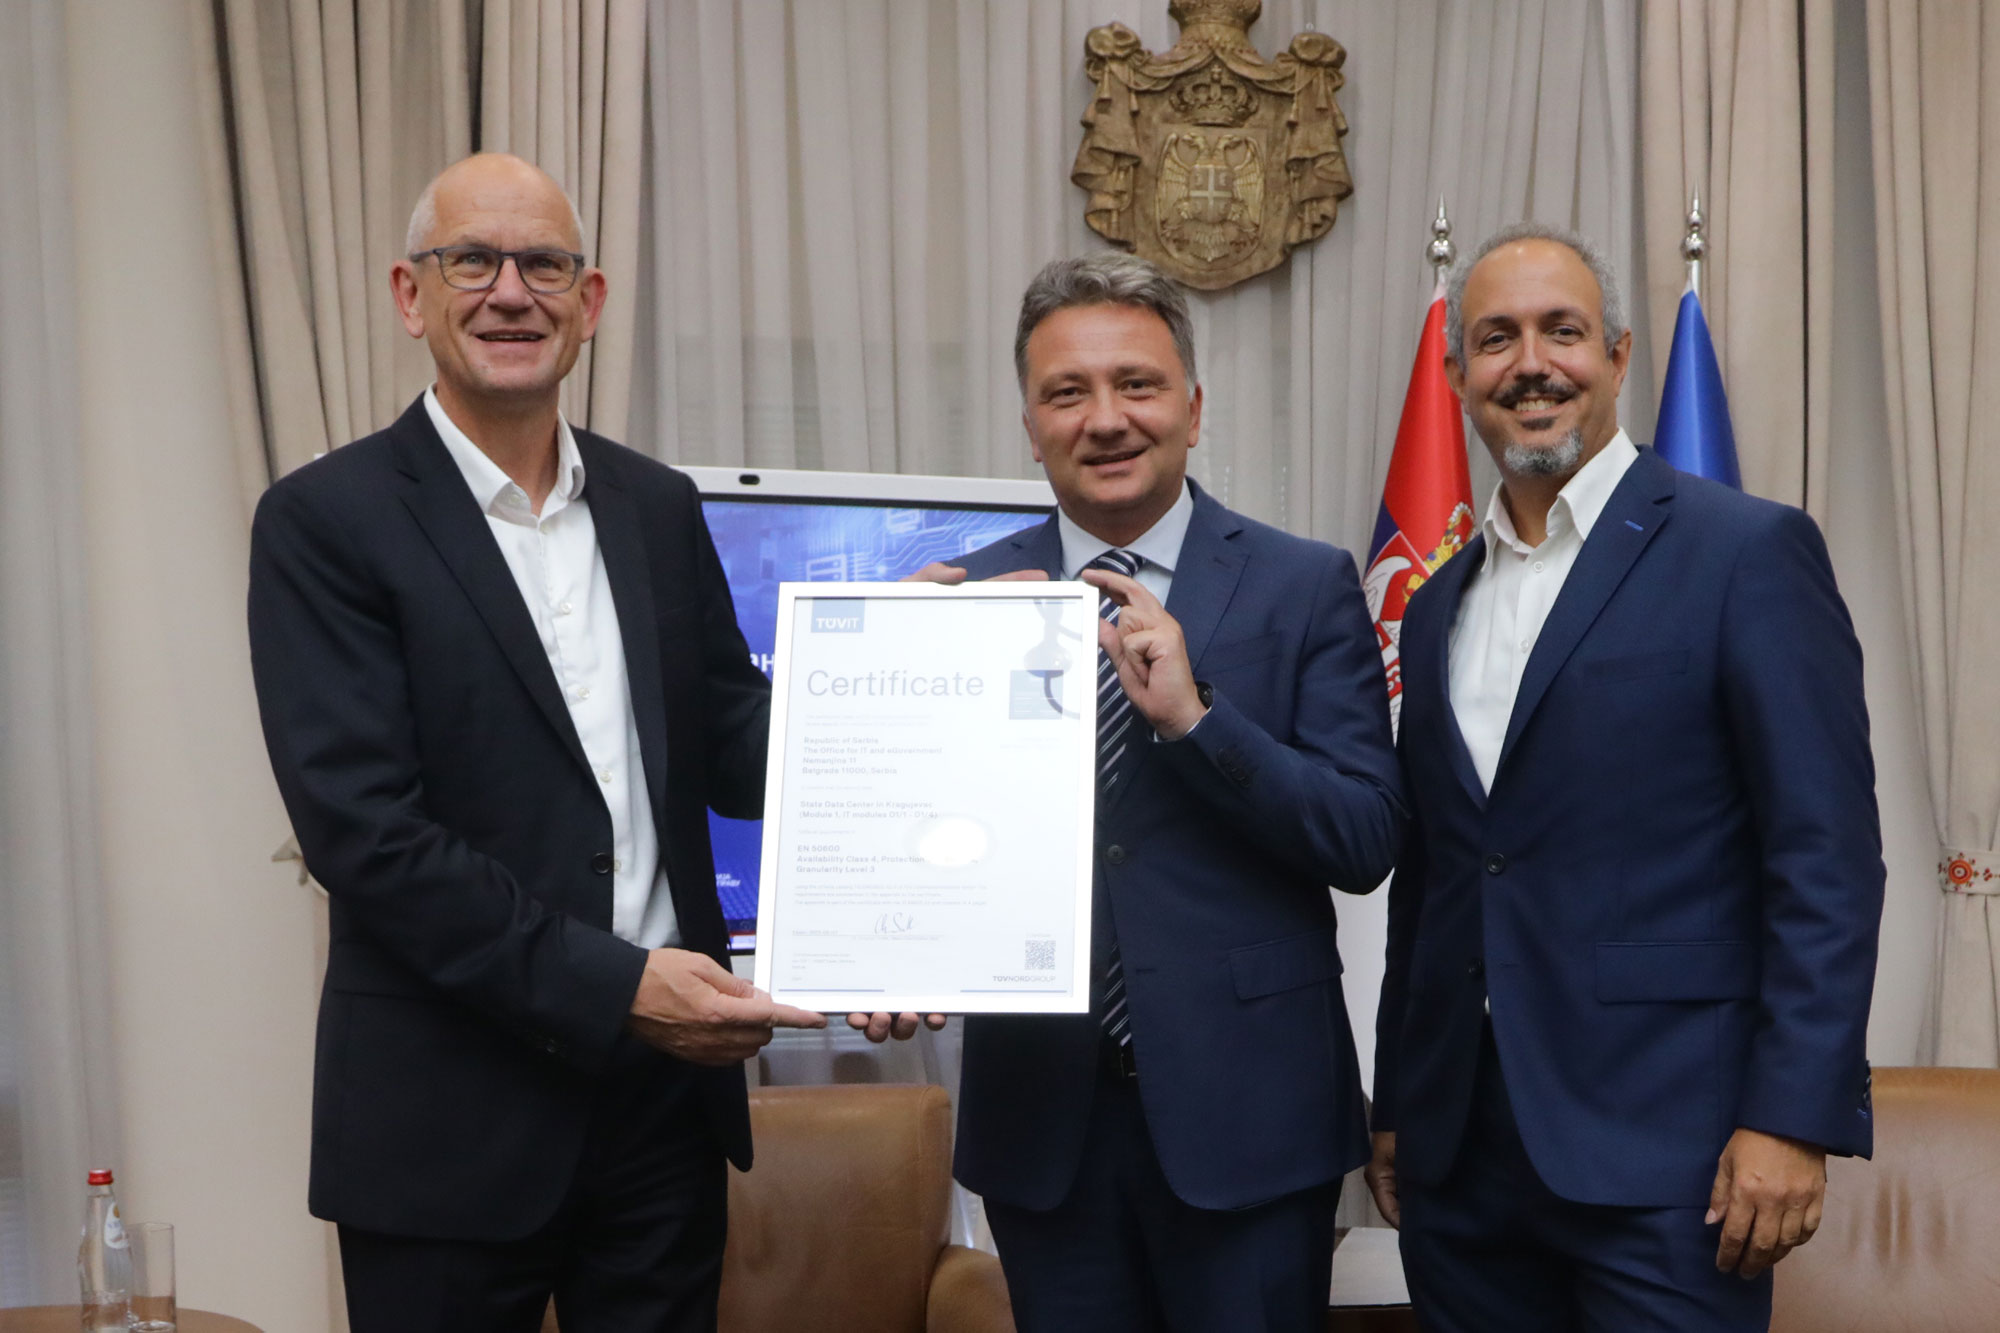 Државни дата центар у Крагујевцу добио међународни сертификат за највиши ниво поузданости и безбедности 